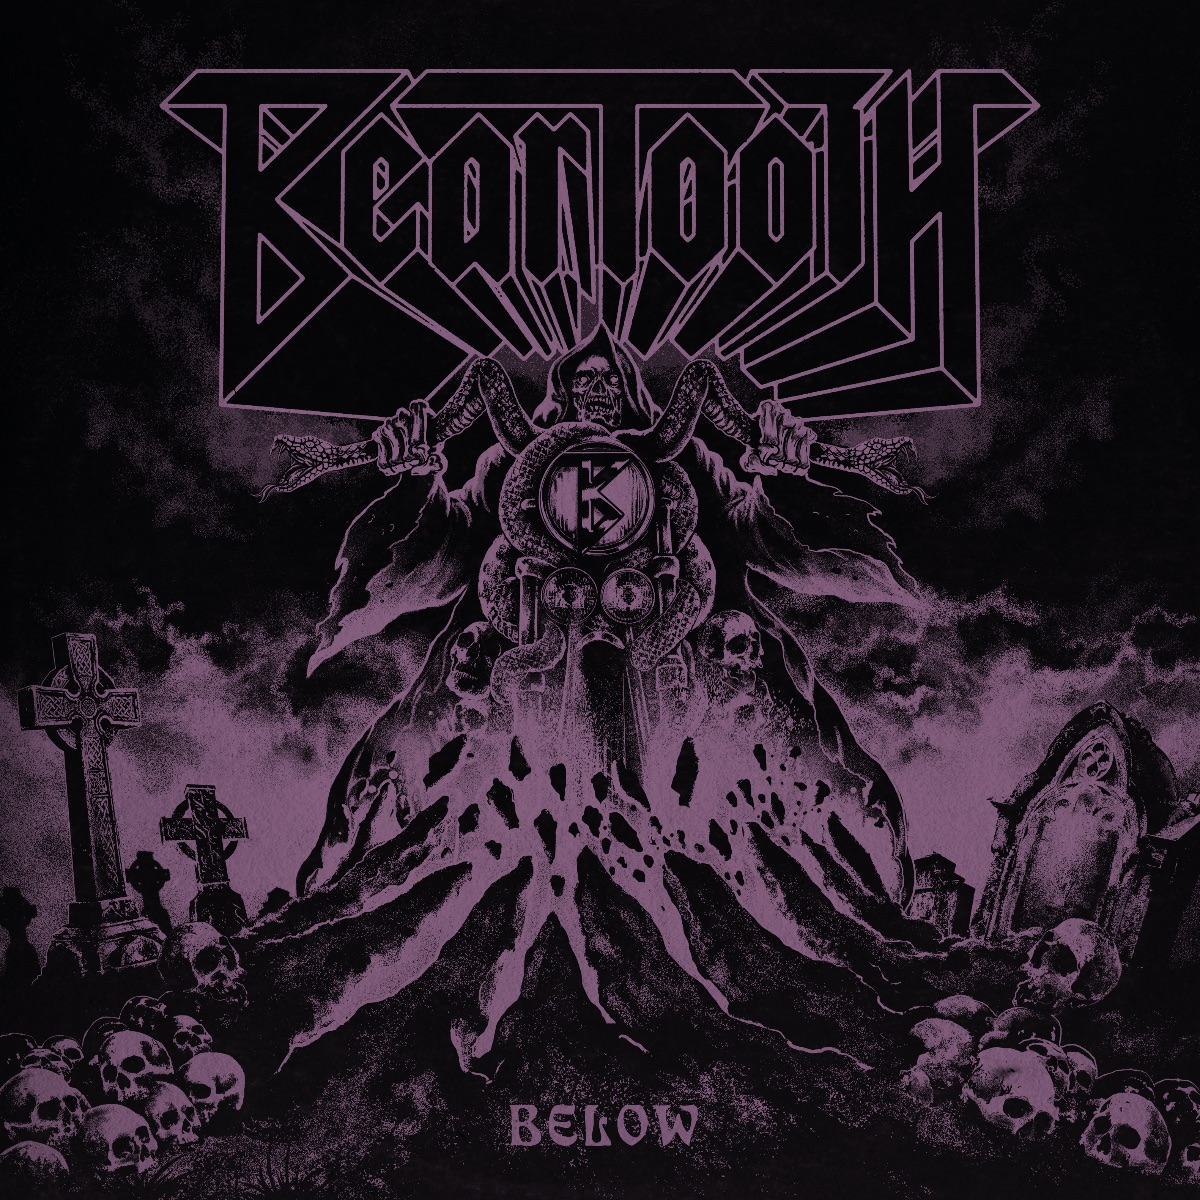 Beartooth Release New Album "Below" Today + Share "Skin" Video